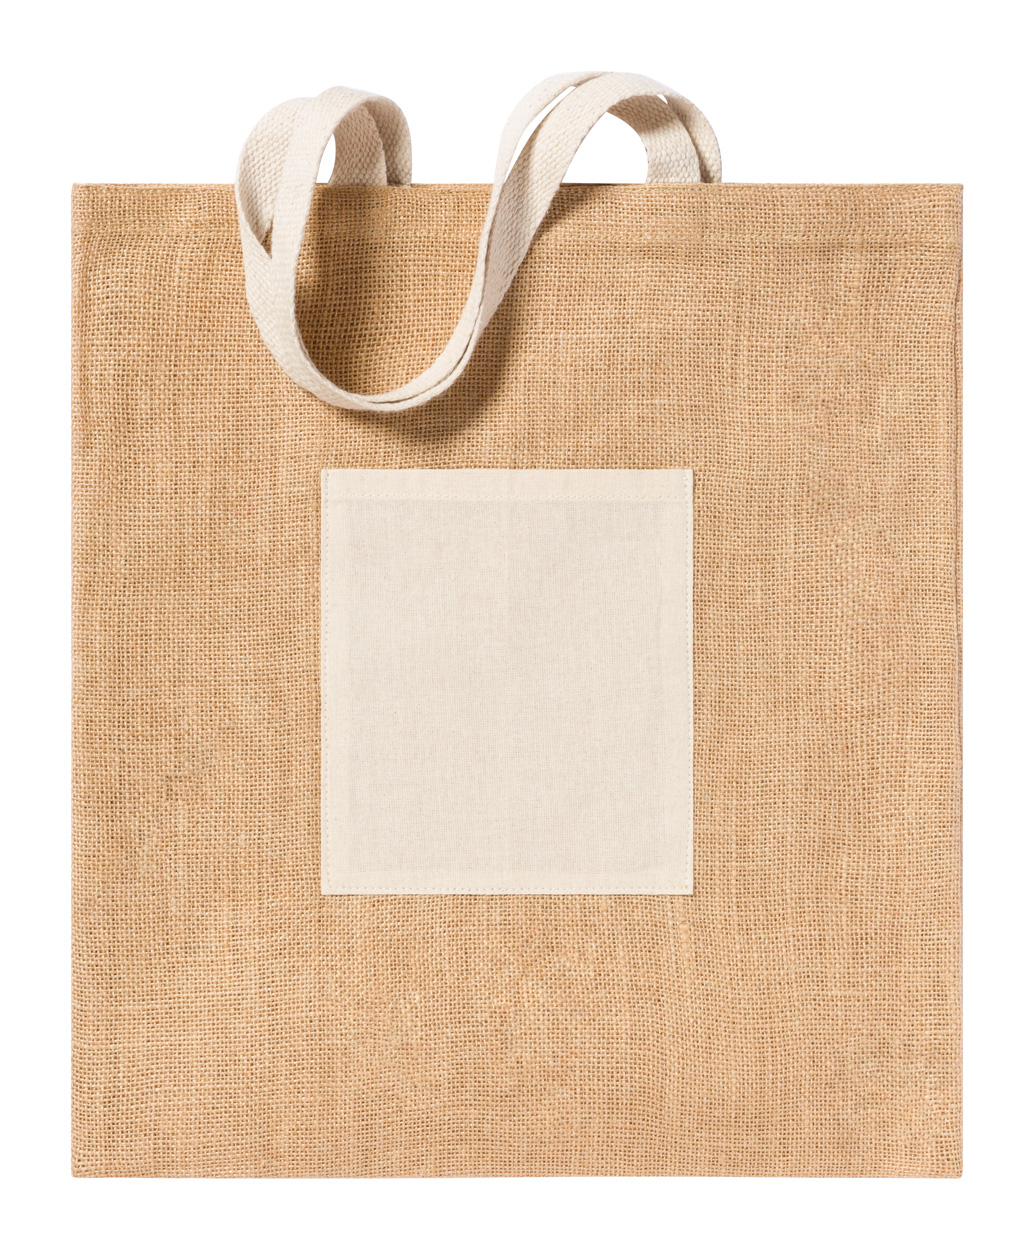 Flobux shopping bag - beige